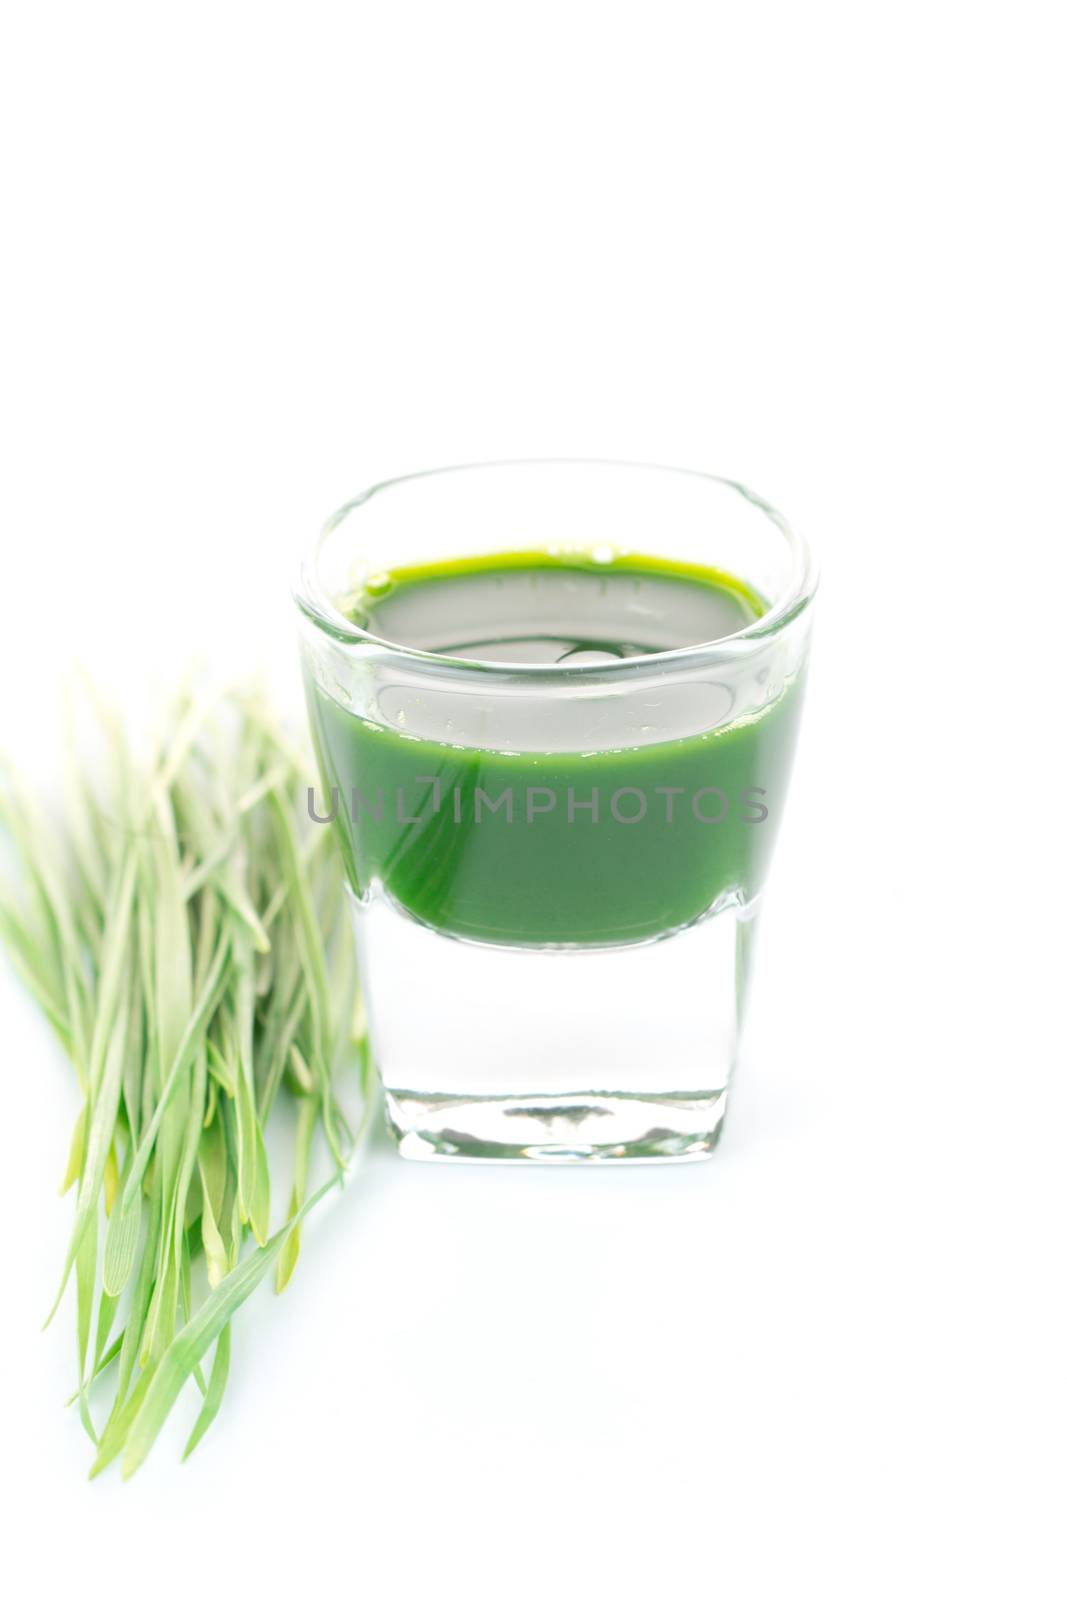 Wheat grass juice  by wyoosumran